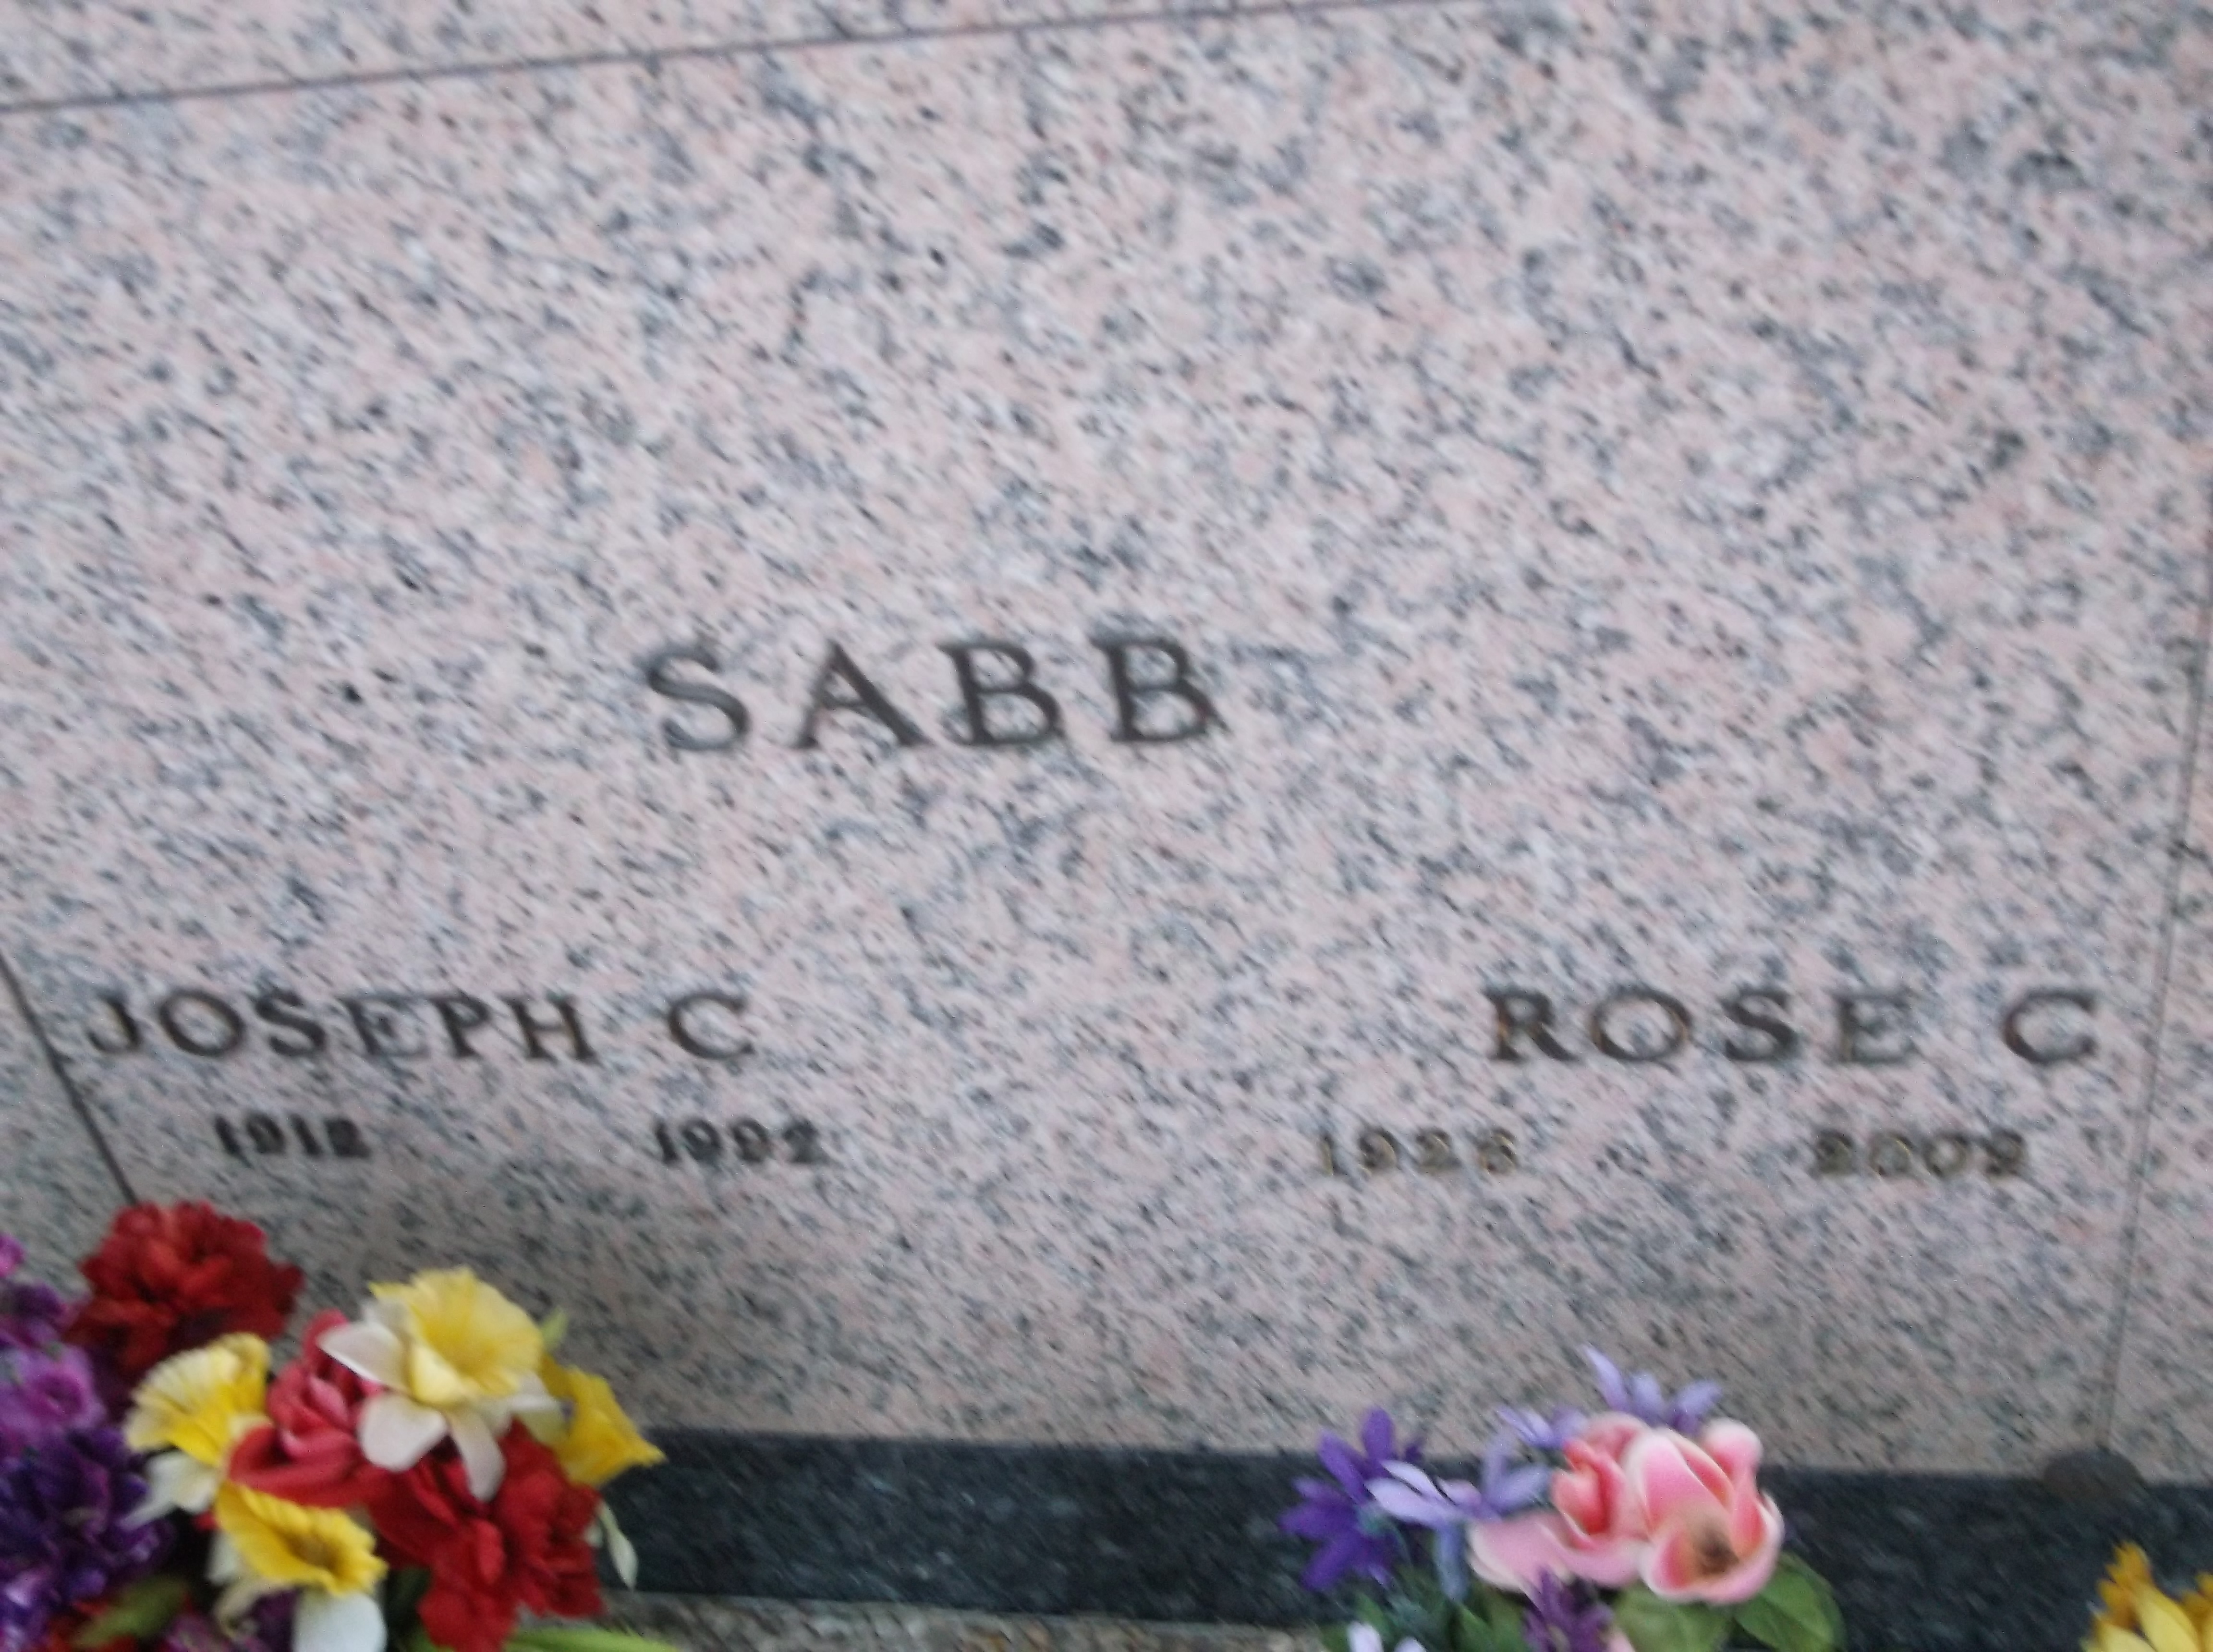 Rose C Sabb